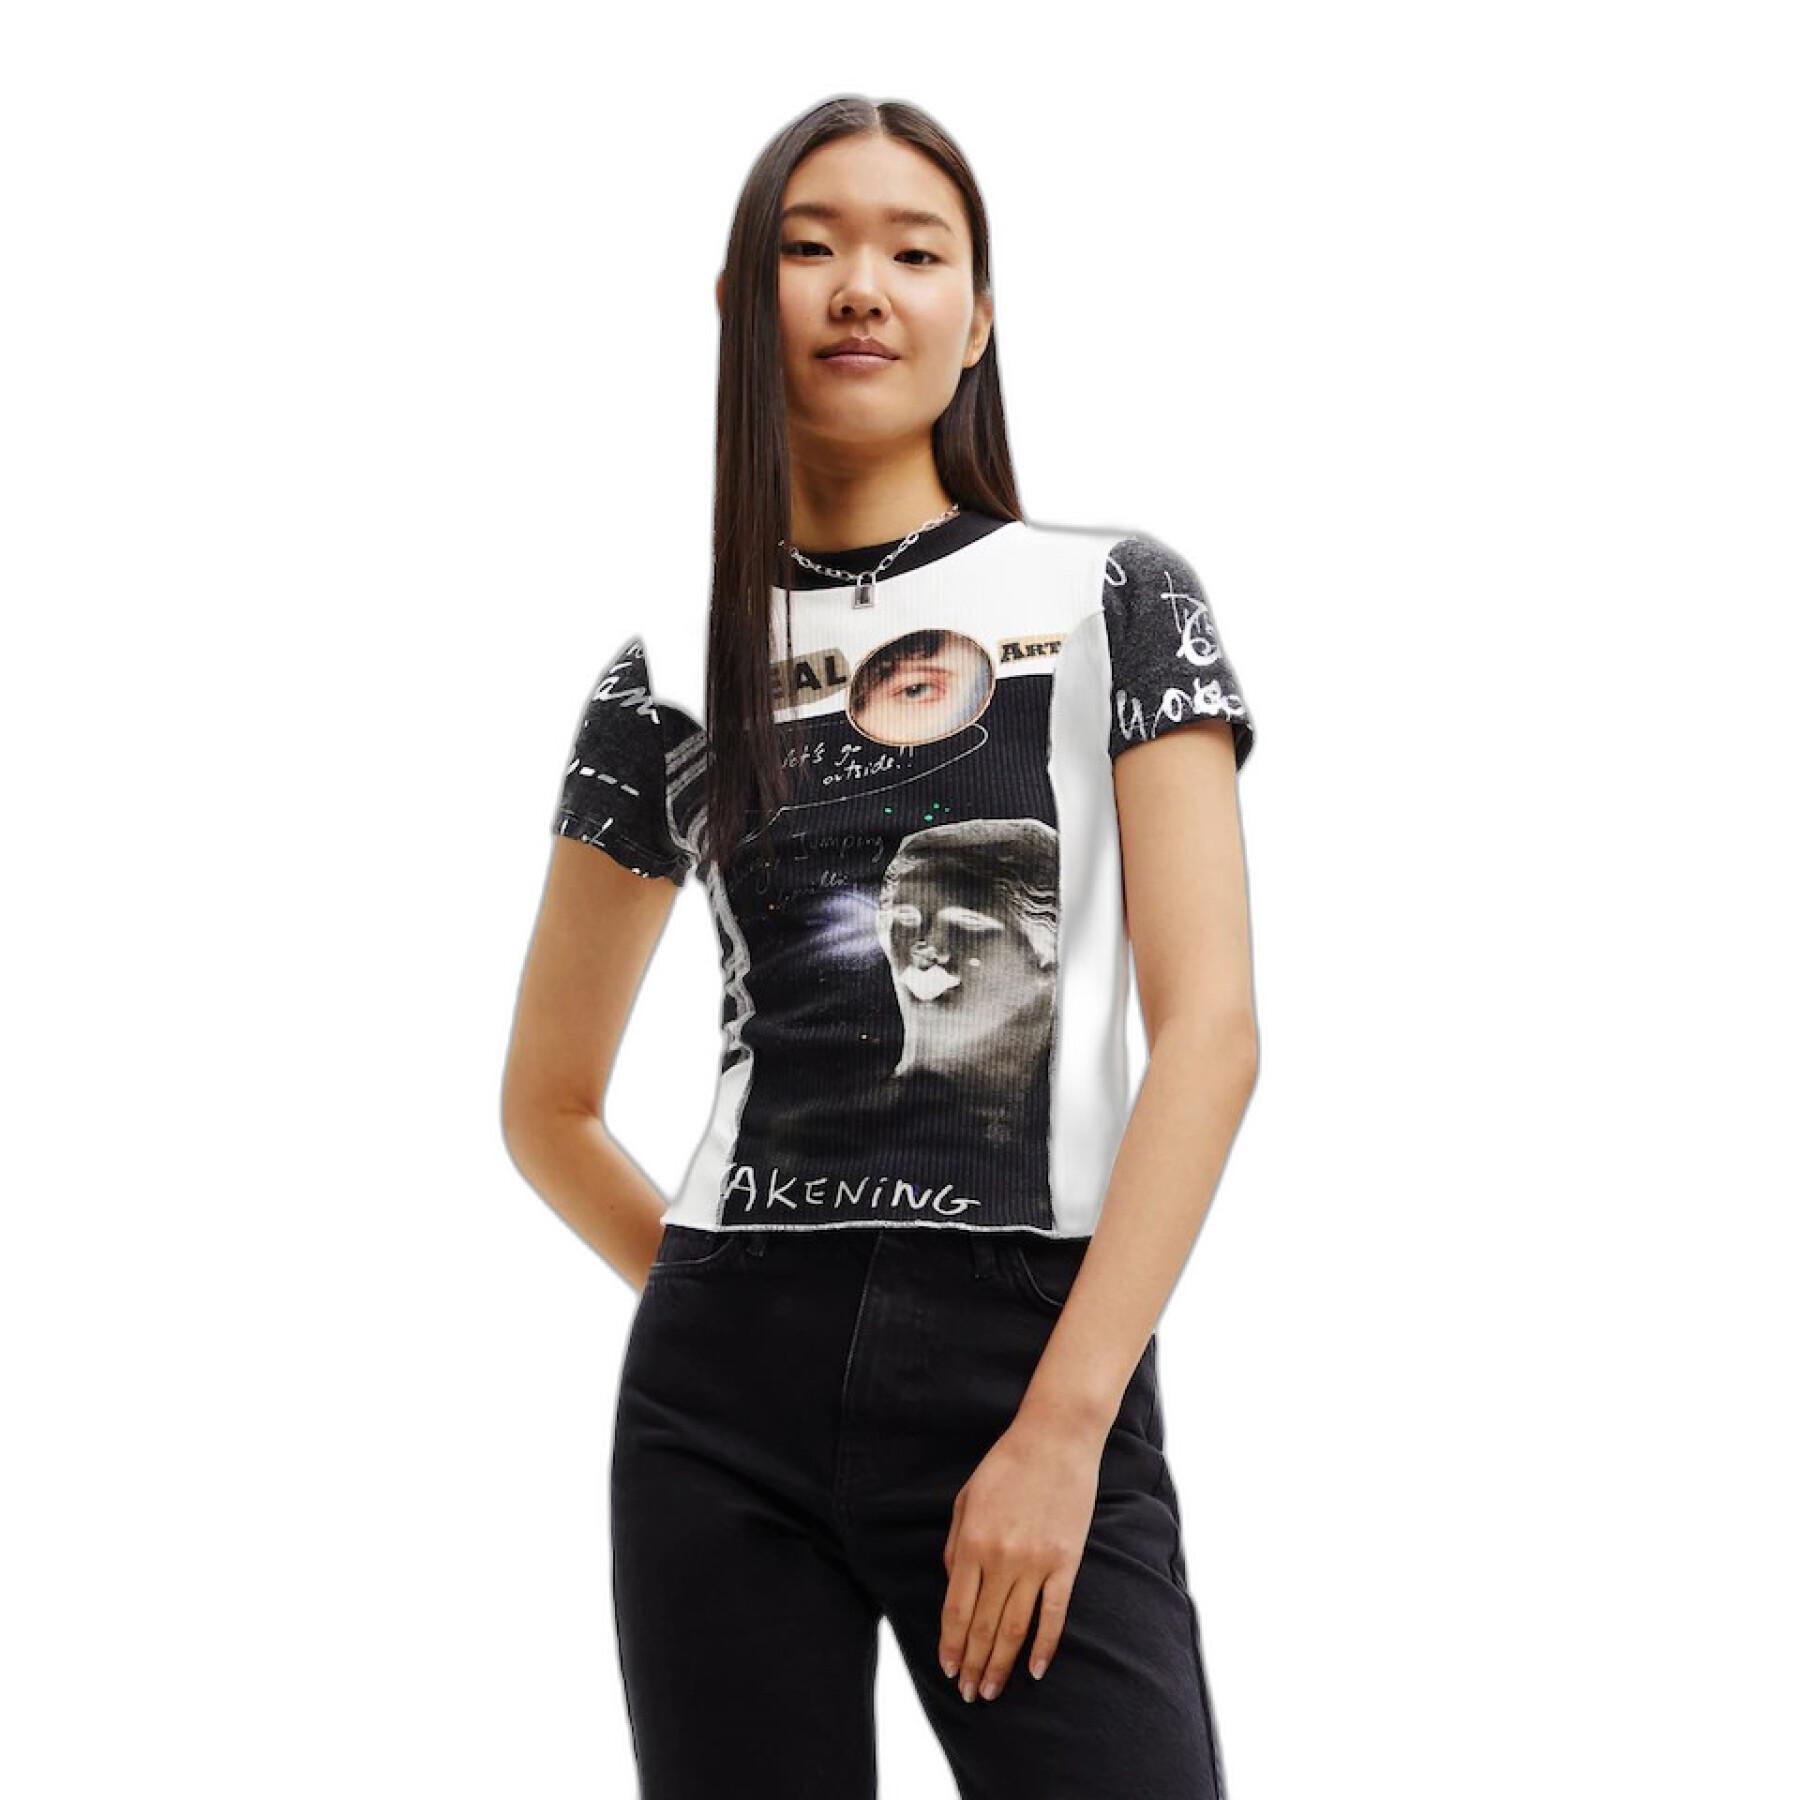 Camiseta de mujer Desigual Real artoholic